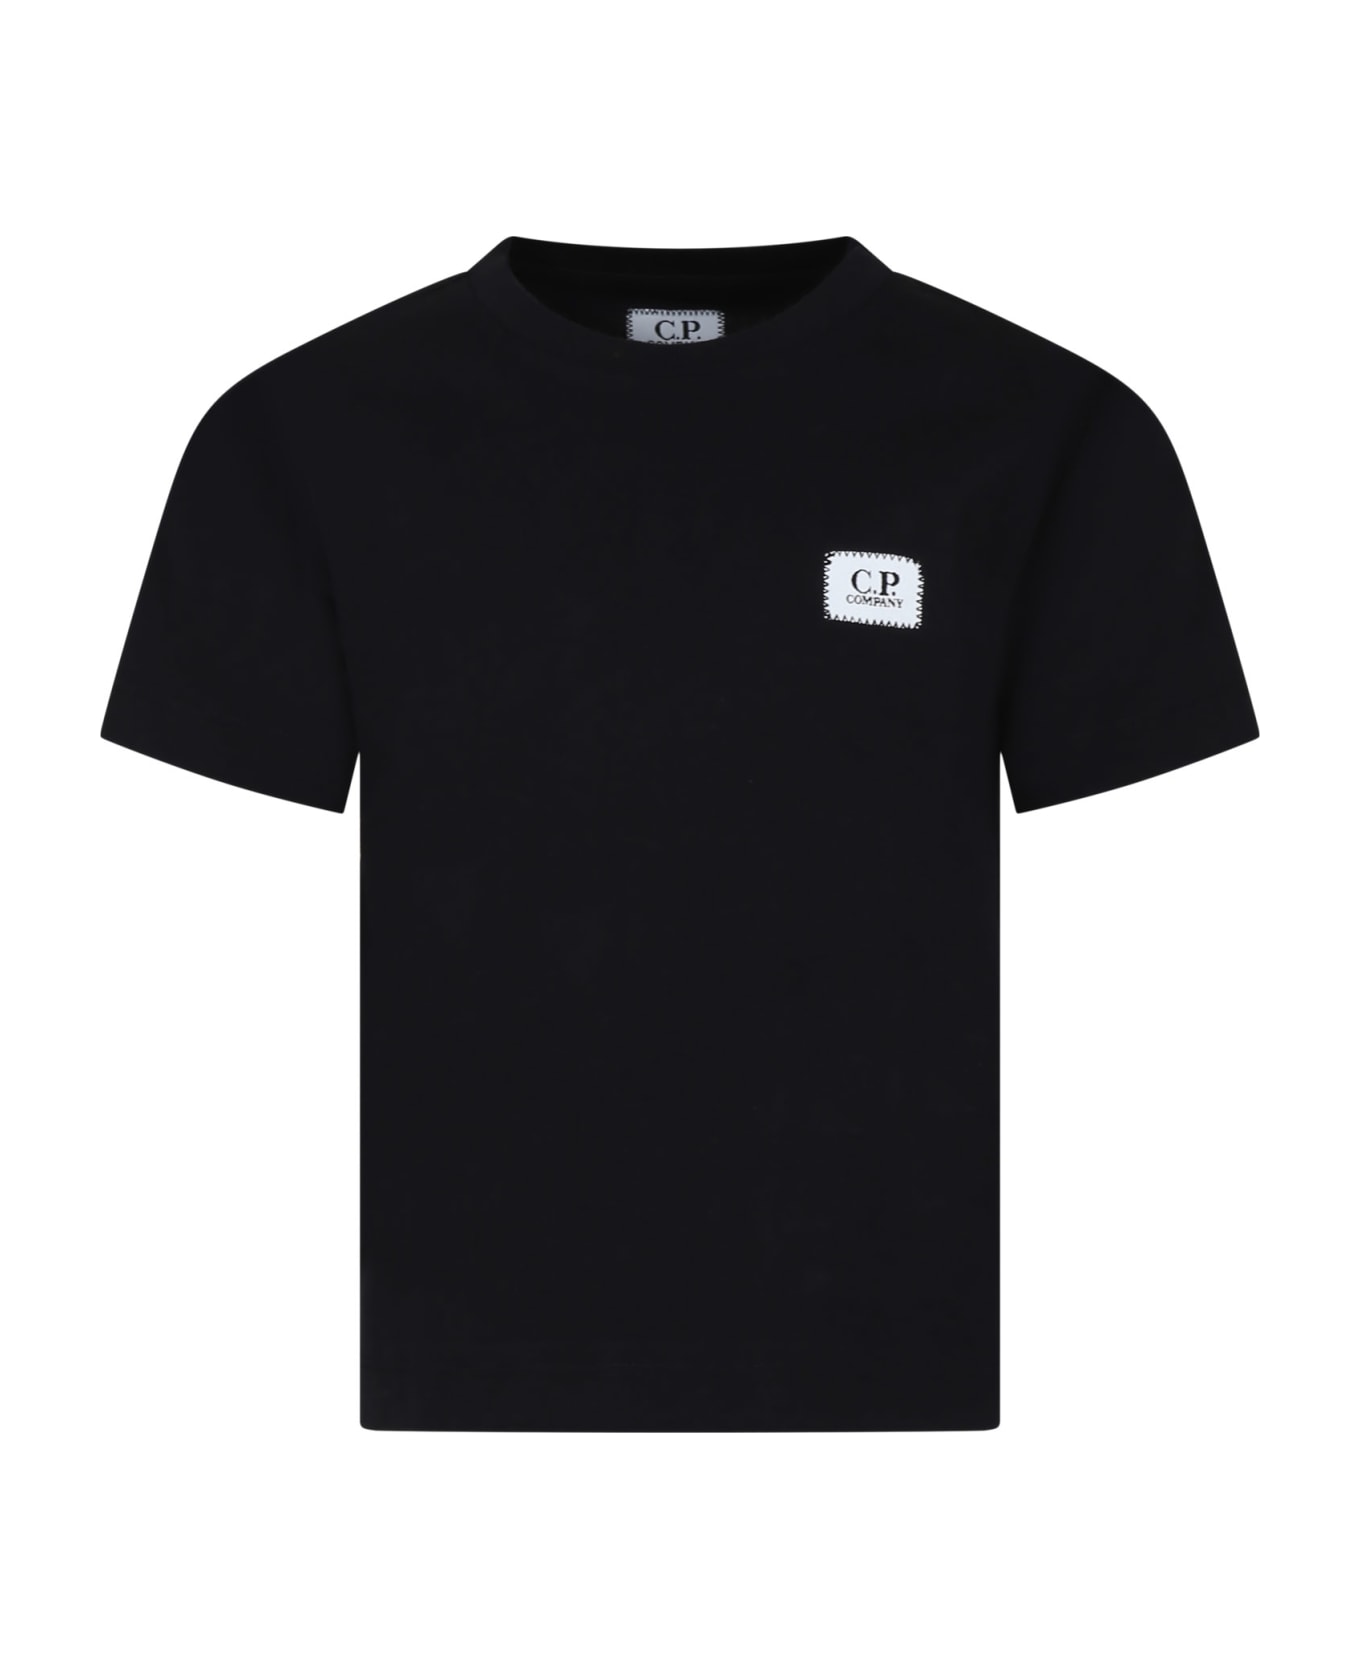 C.P. Company Undersixteen Black T-shirt For Boy With Logo - Nero/Black